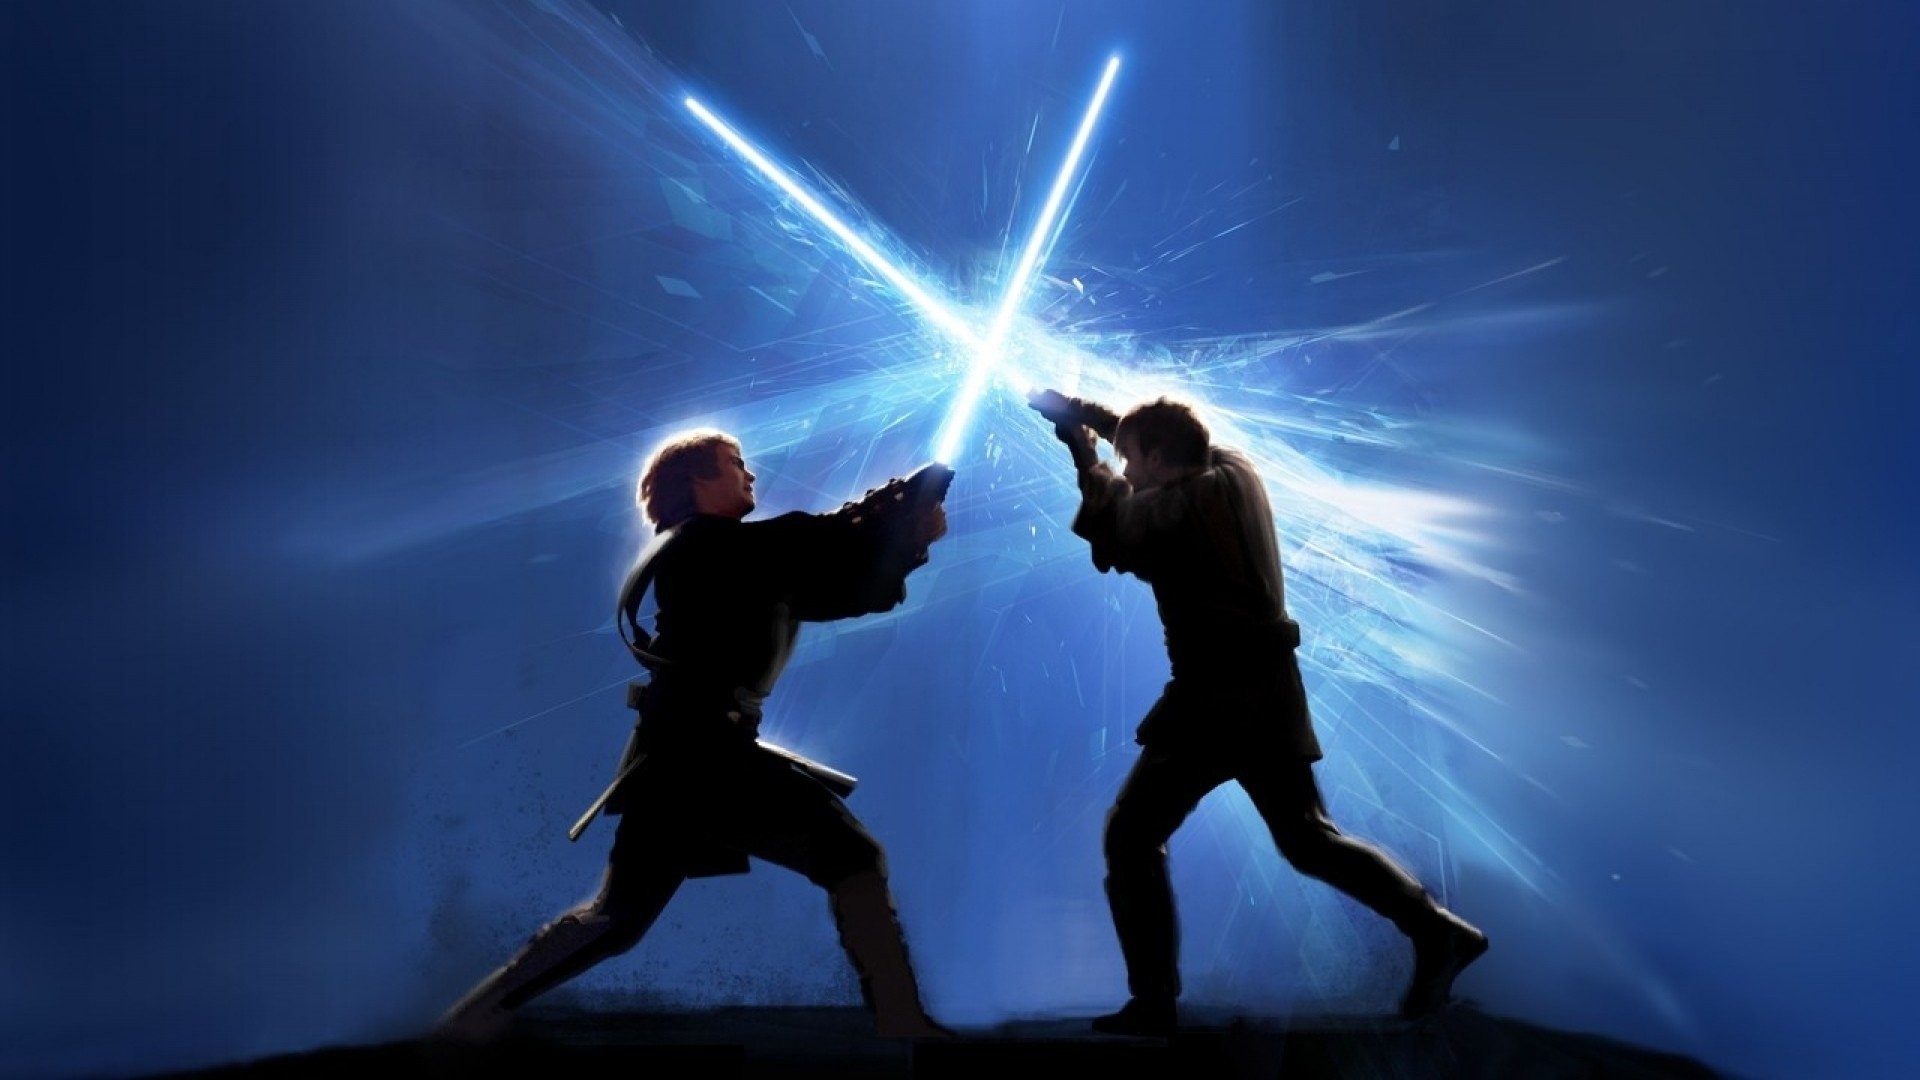 Movie – Star Wars Episode III: Revenge of the Sith Lightsaber Wallpaper